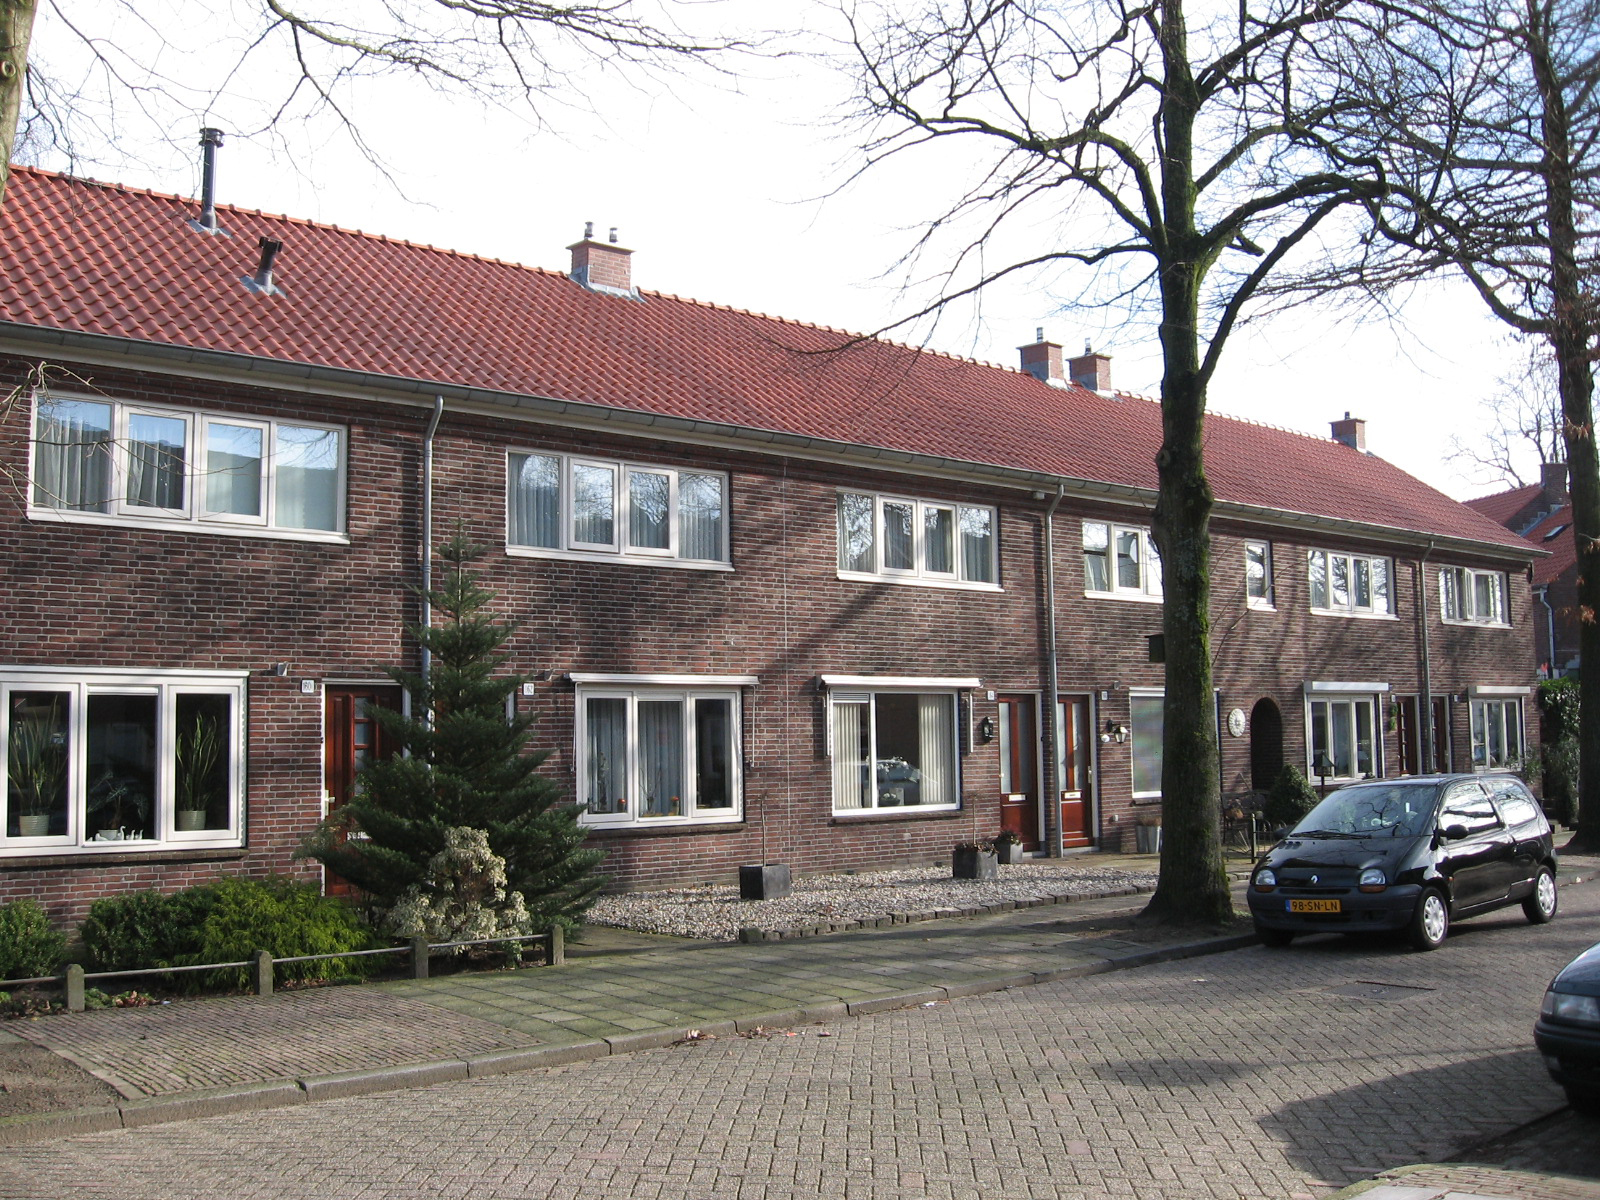 Christoffelstraat 43, 7601 GC Almelo, Nederland